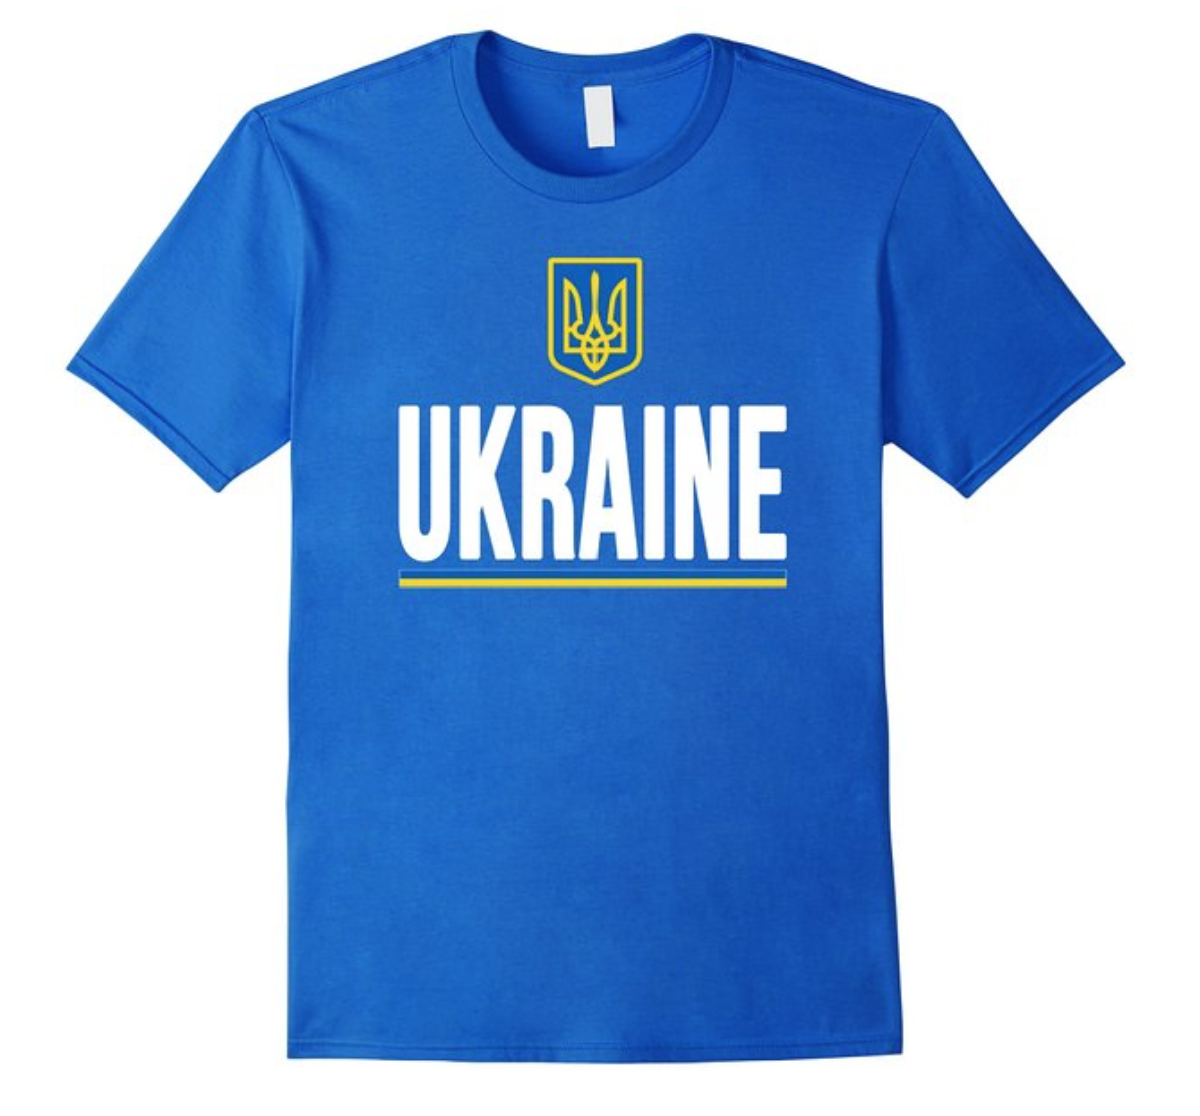 Ukrainian National Team Tee Shirt